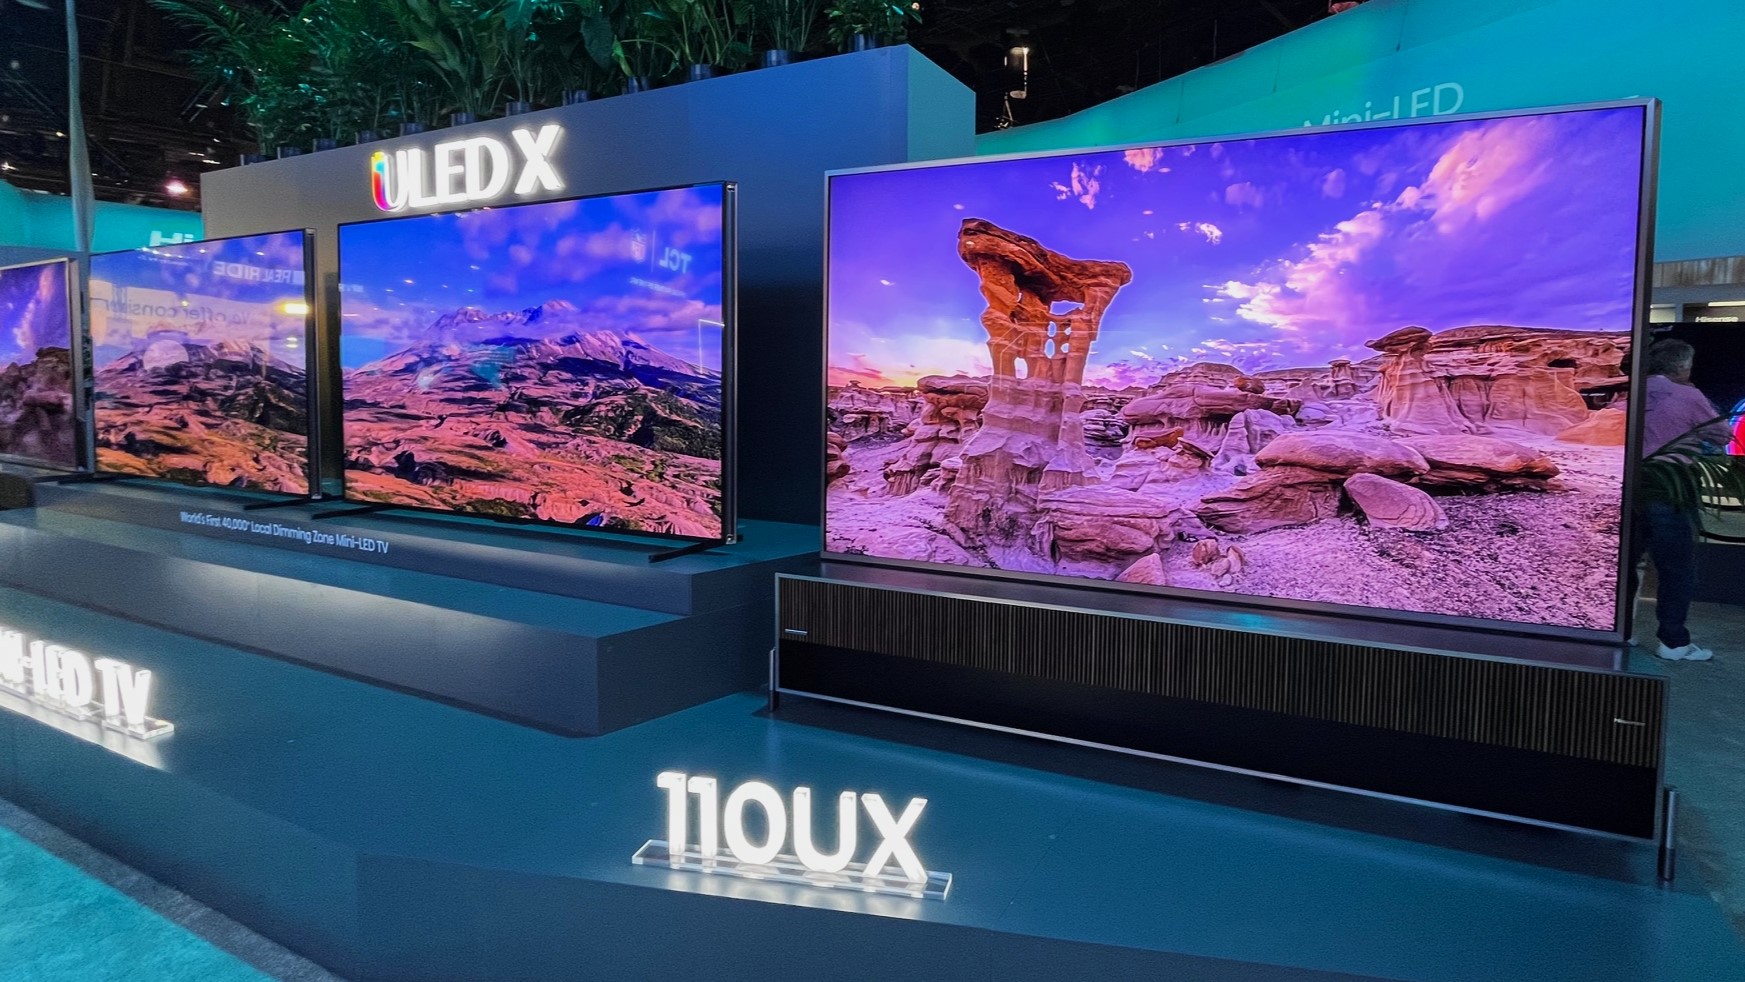 Hisense ULED-X TVs on display at CES